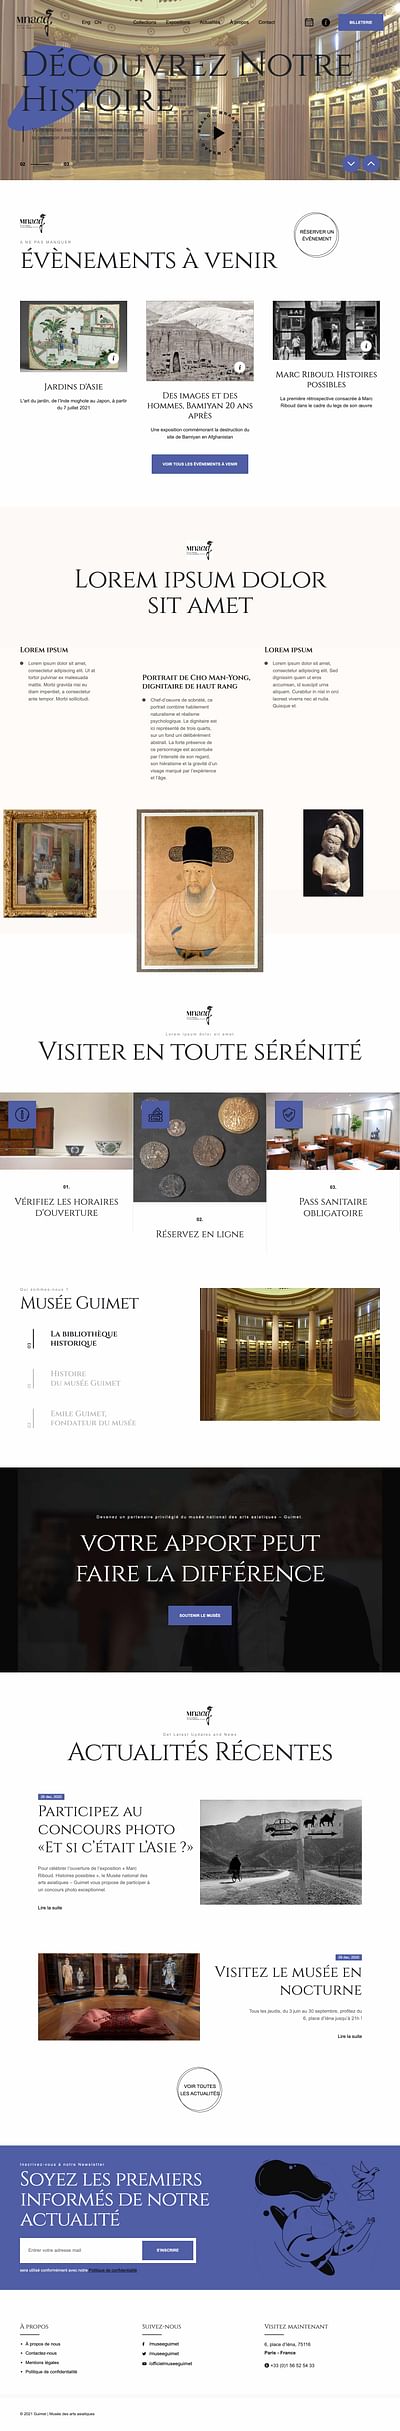 Appel d'offre: la refonte du site du musée Guimet - Creazione di siti web